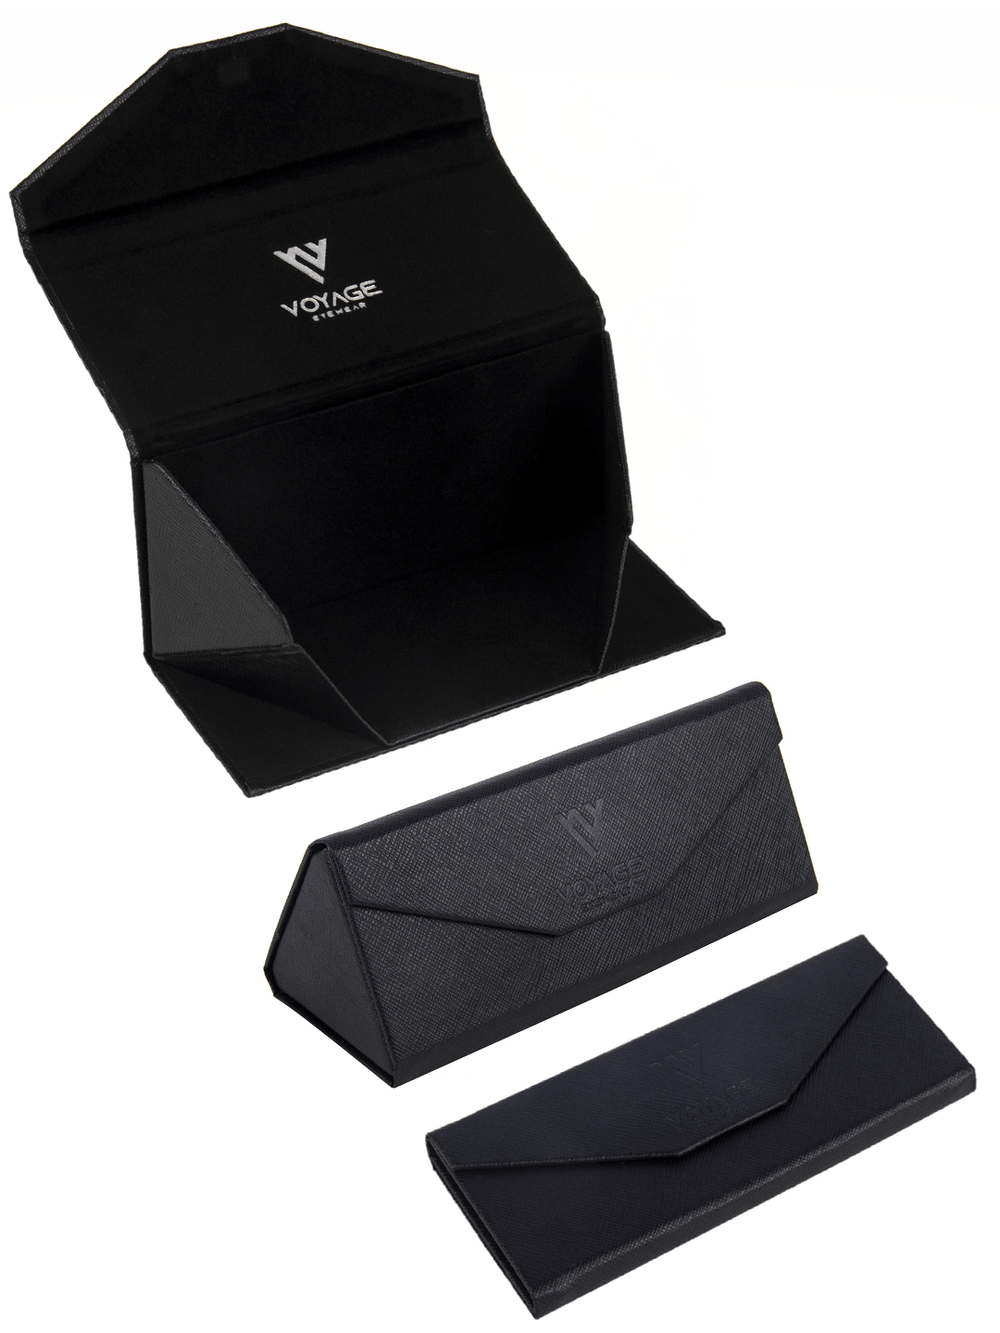 Voyage Exclusive Grey & Black Polarized Round Sunglasses for Men & Women (TR8087PMG4310)